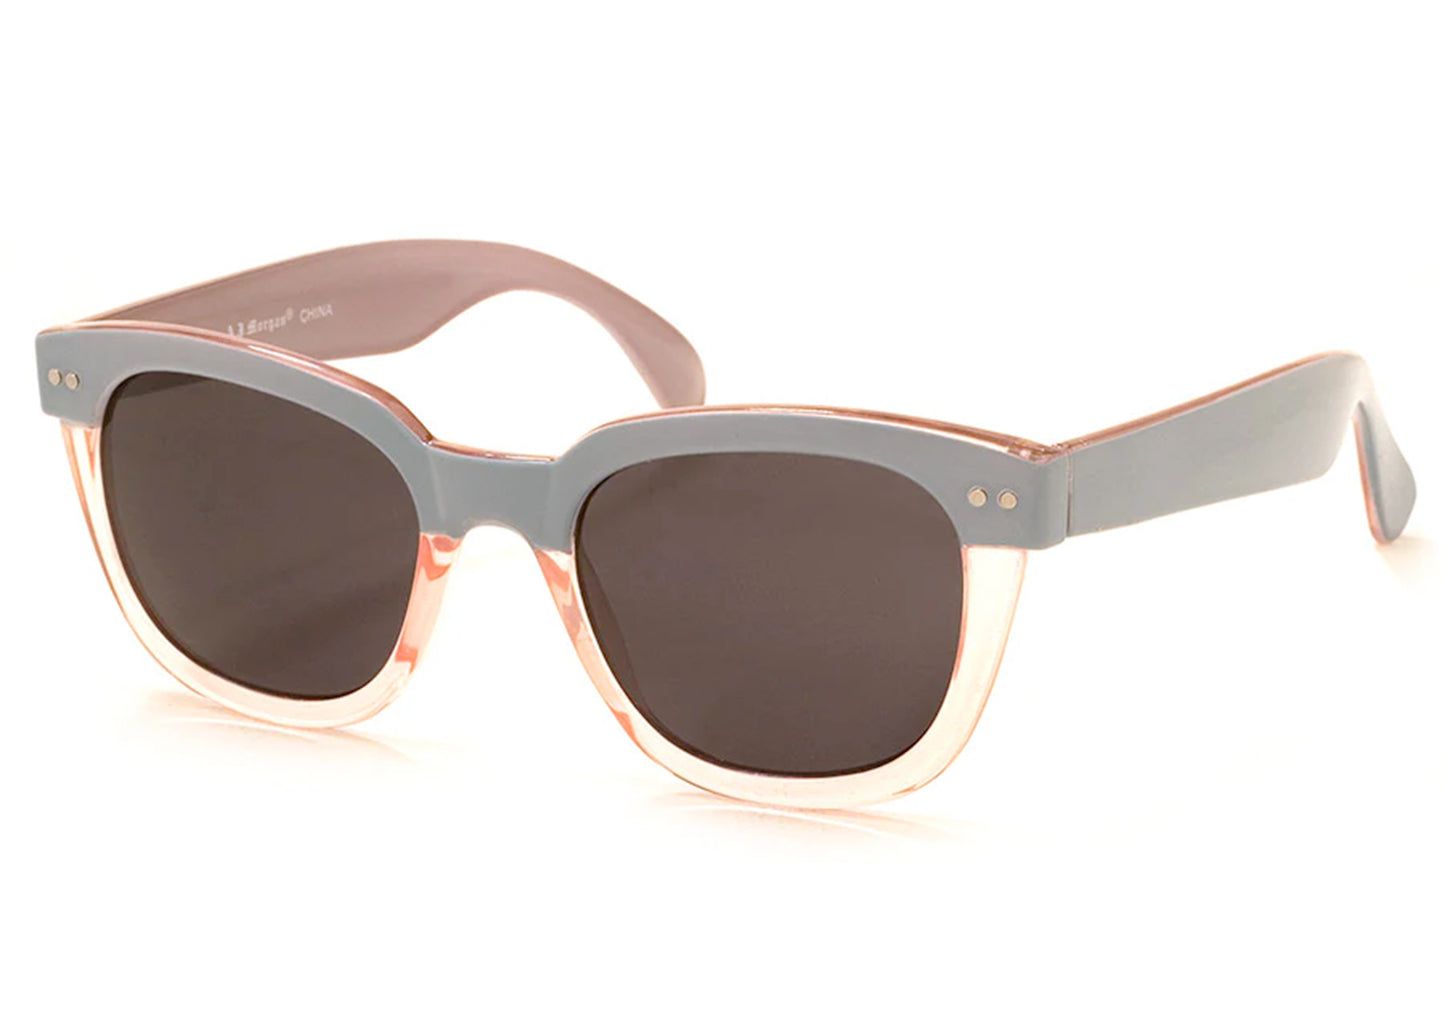 New School Sunglasses in Light Blue/Pink